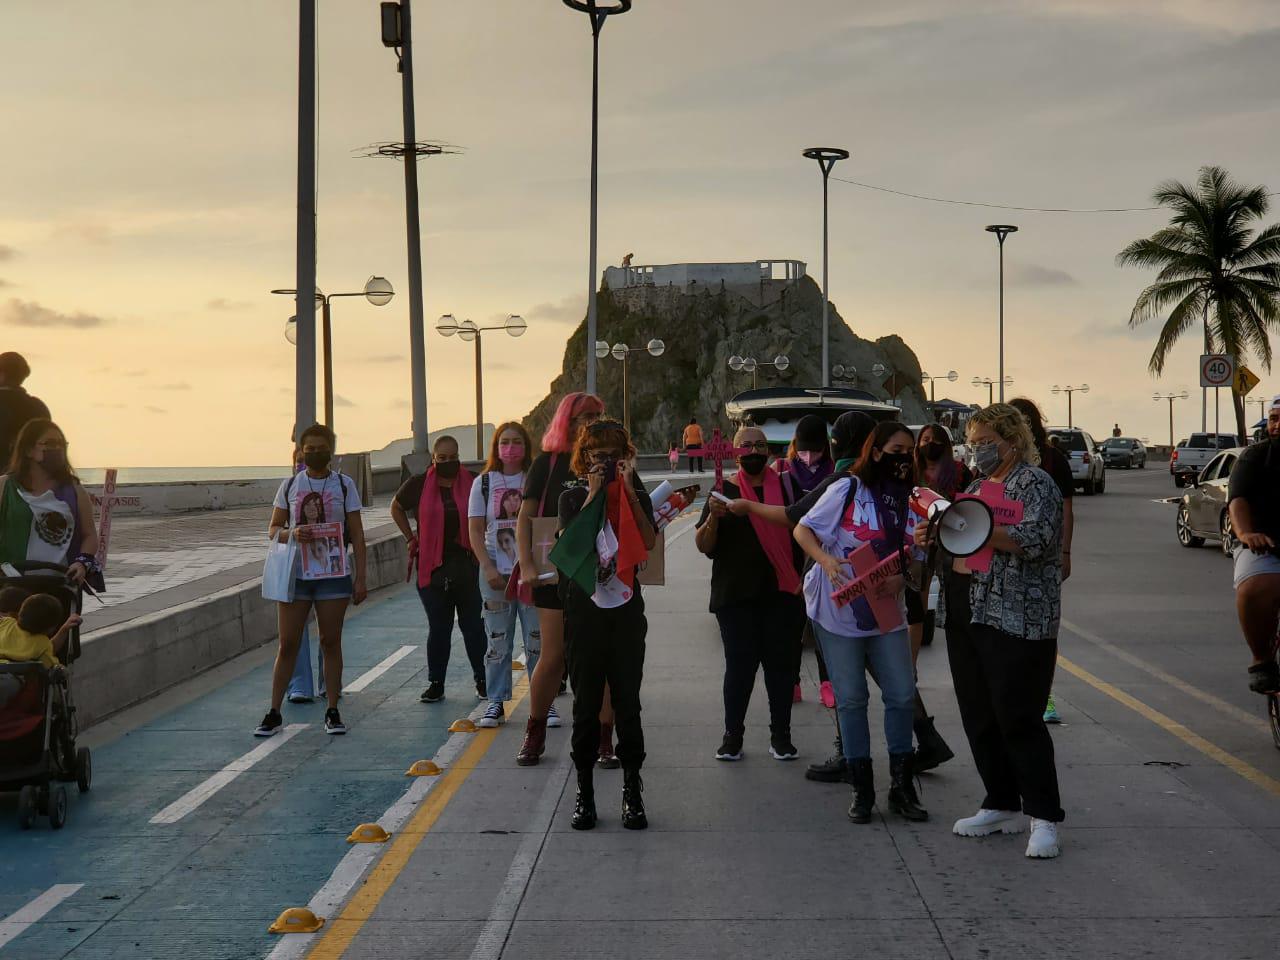 $!‘Ahorcan’ Policías municipales de Mazatlán a menor de edad en manifestación feminista